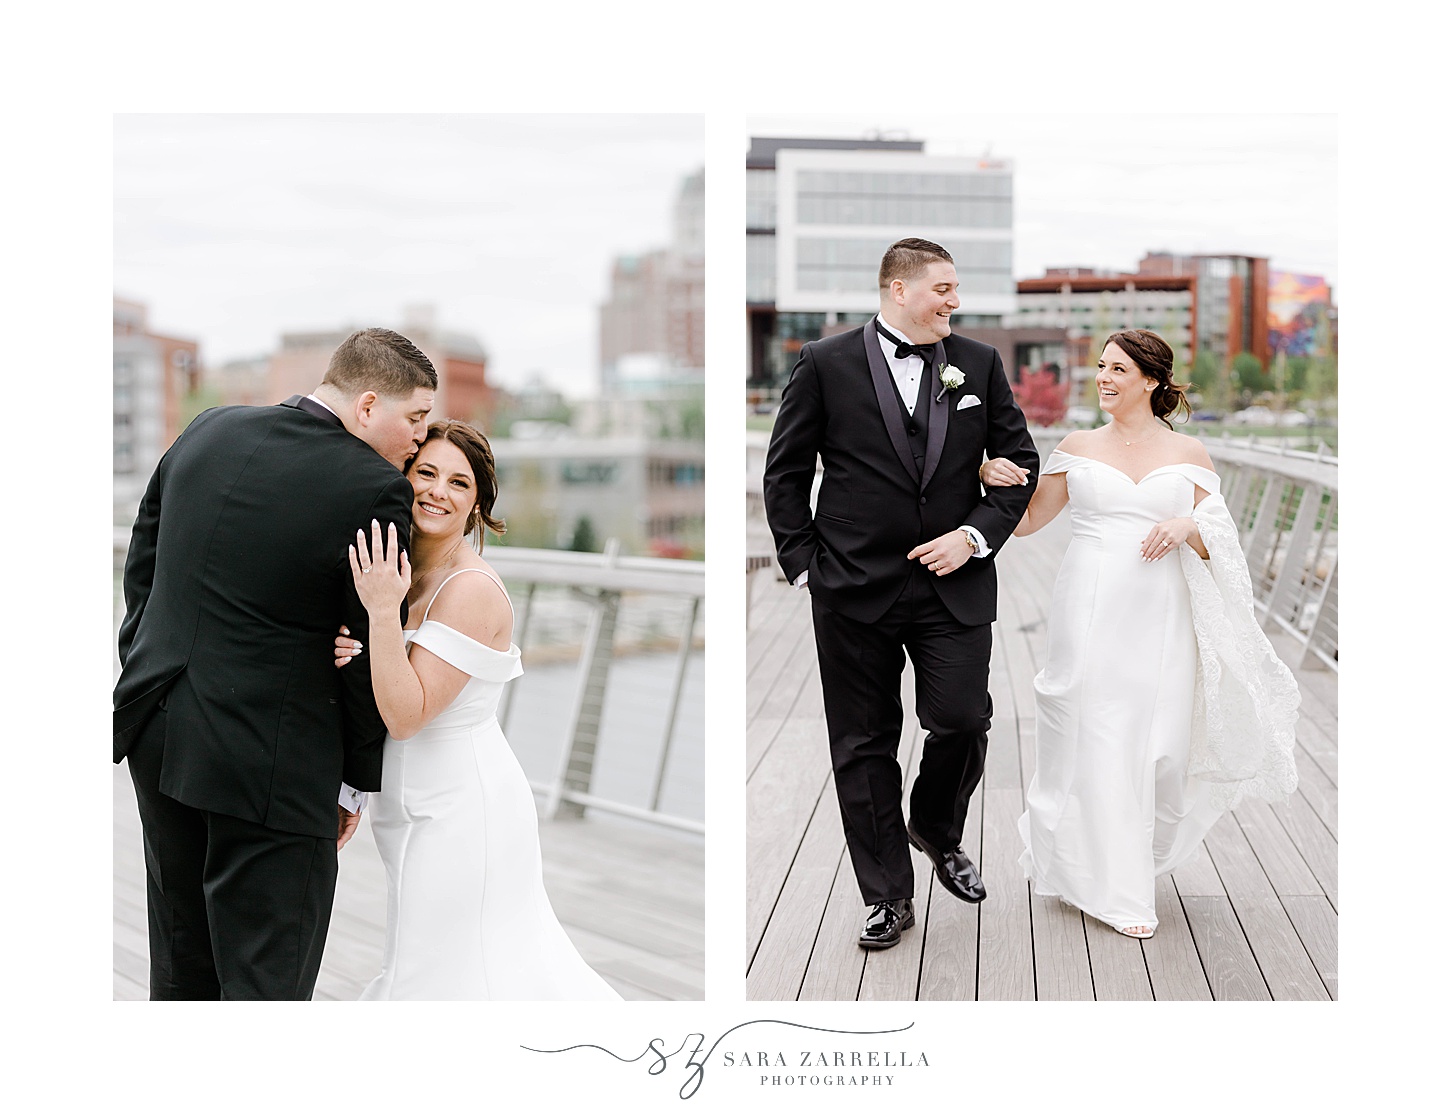 newlyweds walk together along the Providence Pedestrian Bridge